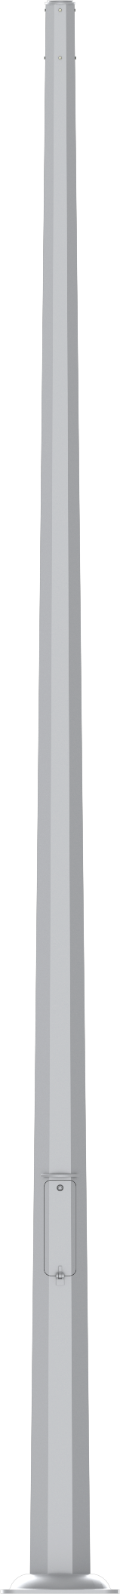 Octagonal Cone Pole